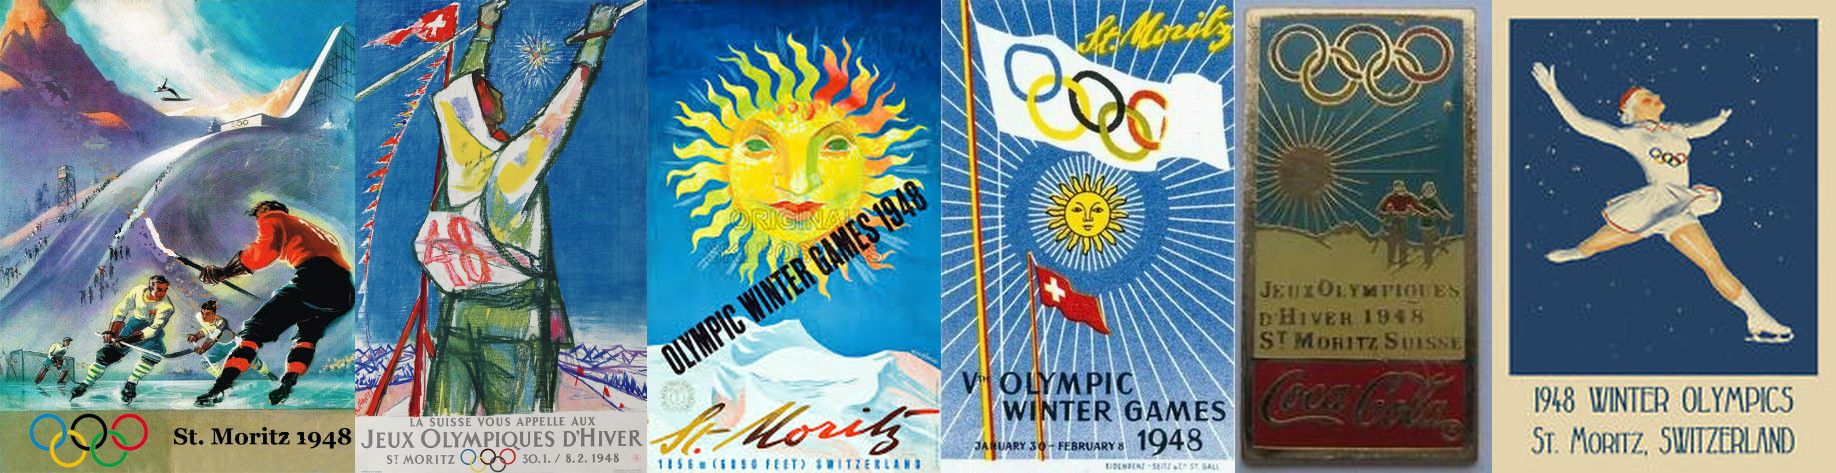 Photos: 1948 Winter Olympics Posters 